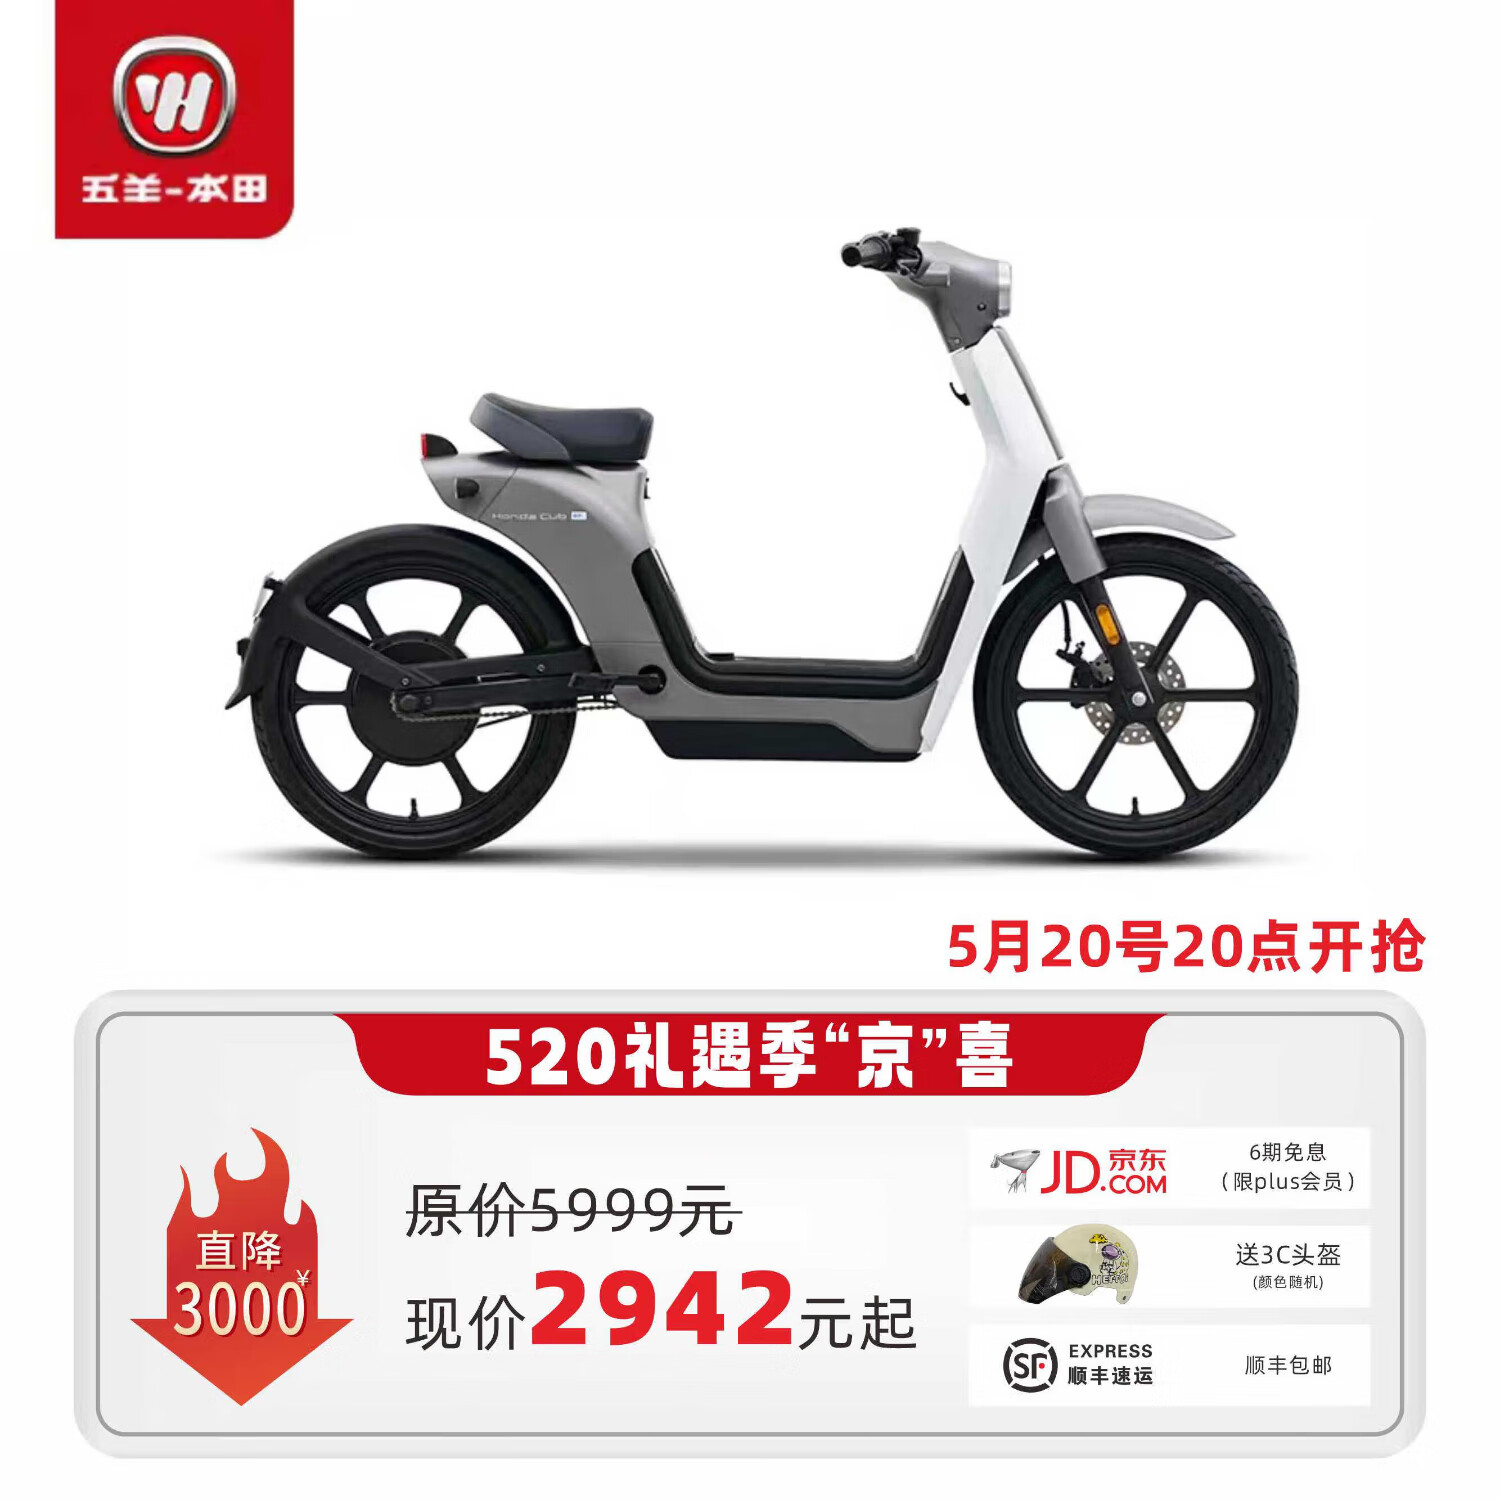 WUYANG-HONDA 五羊-本田 Honda幼兽电动自行车 3033元